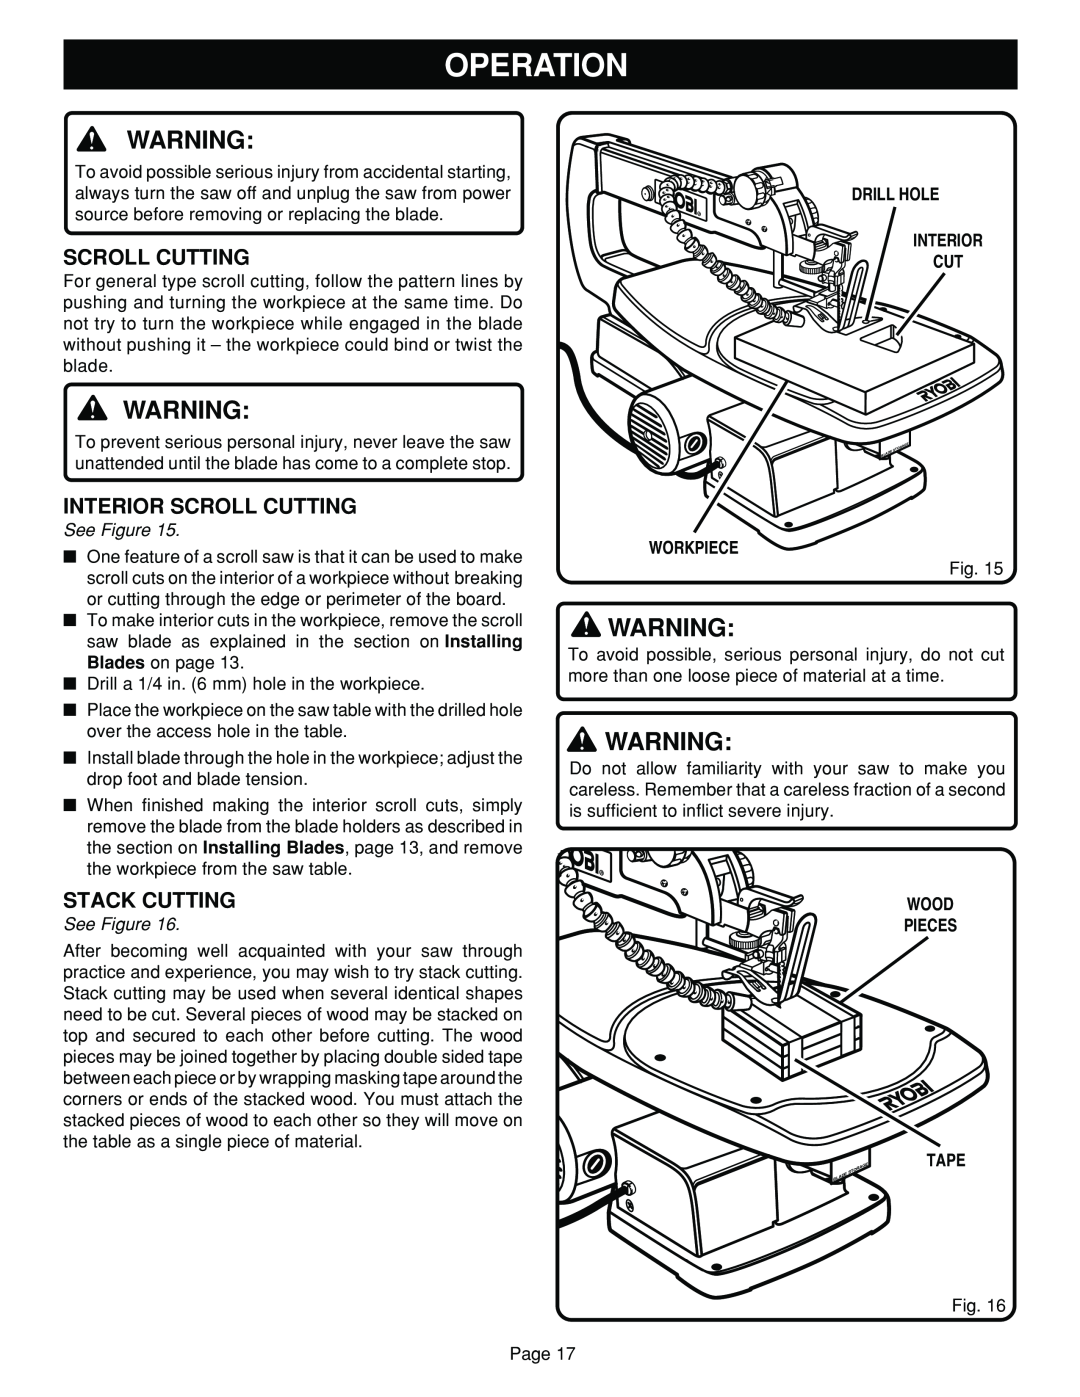 Ryobi SC180VS manual Interior Scroll Cutting, Stack Cutting, Operation, See Figure 